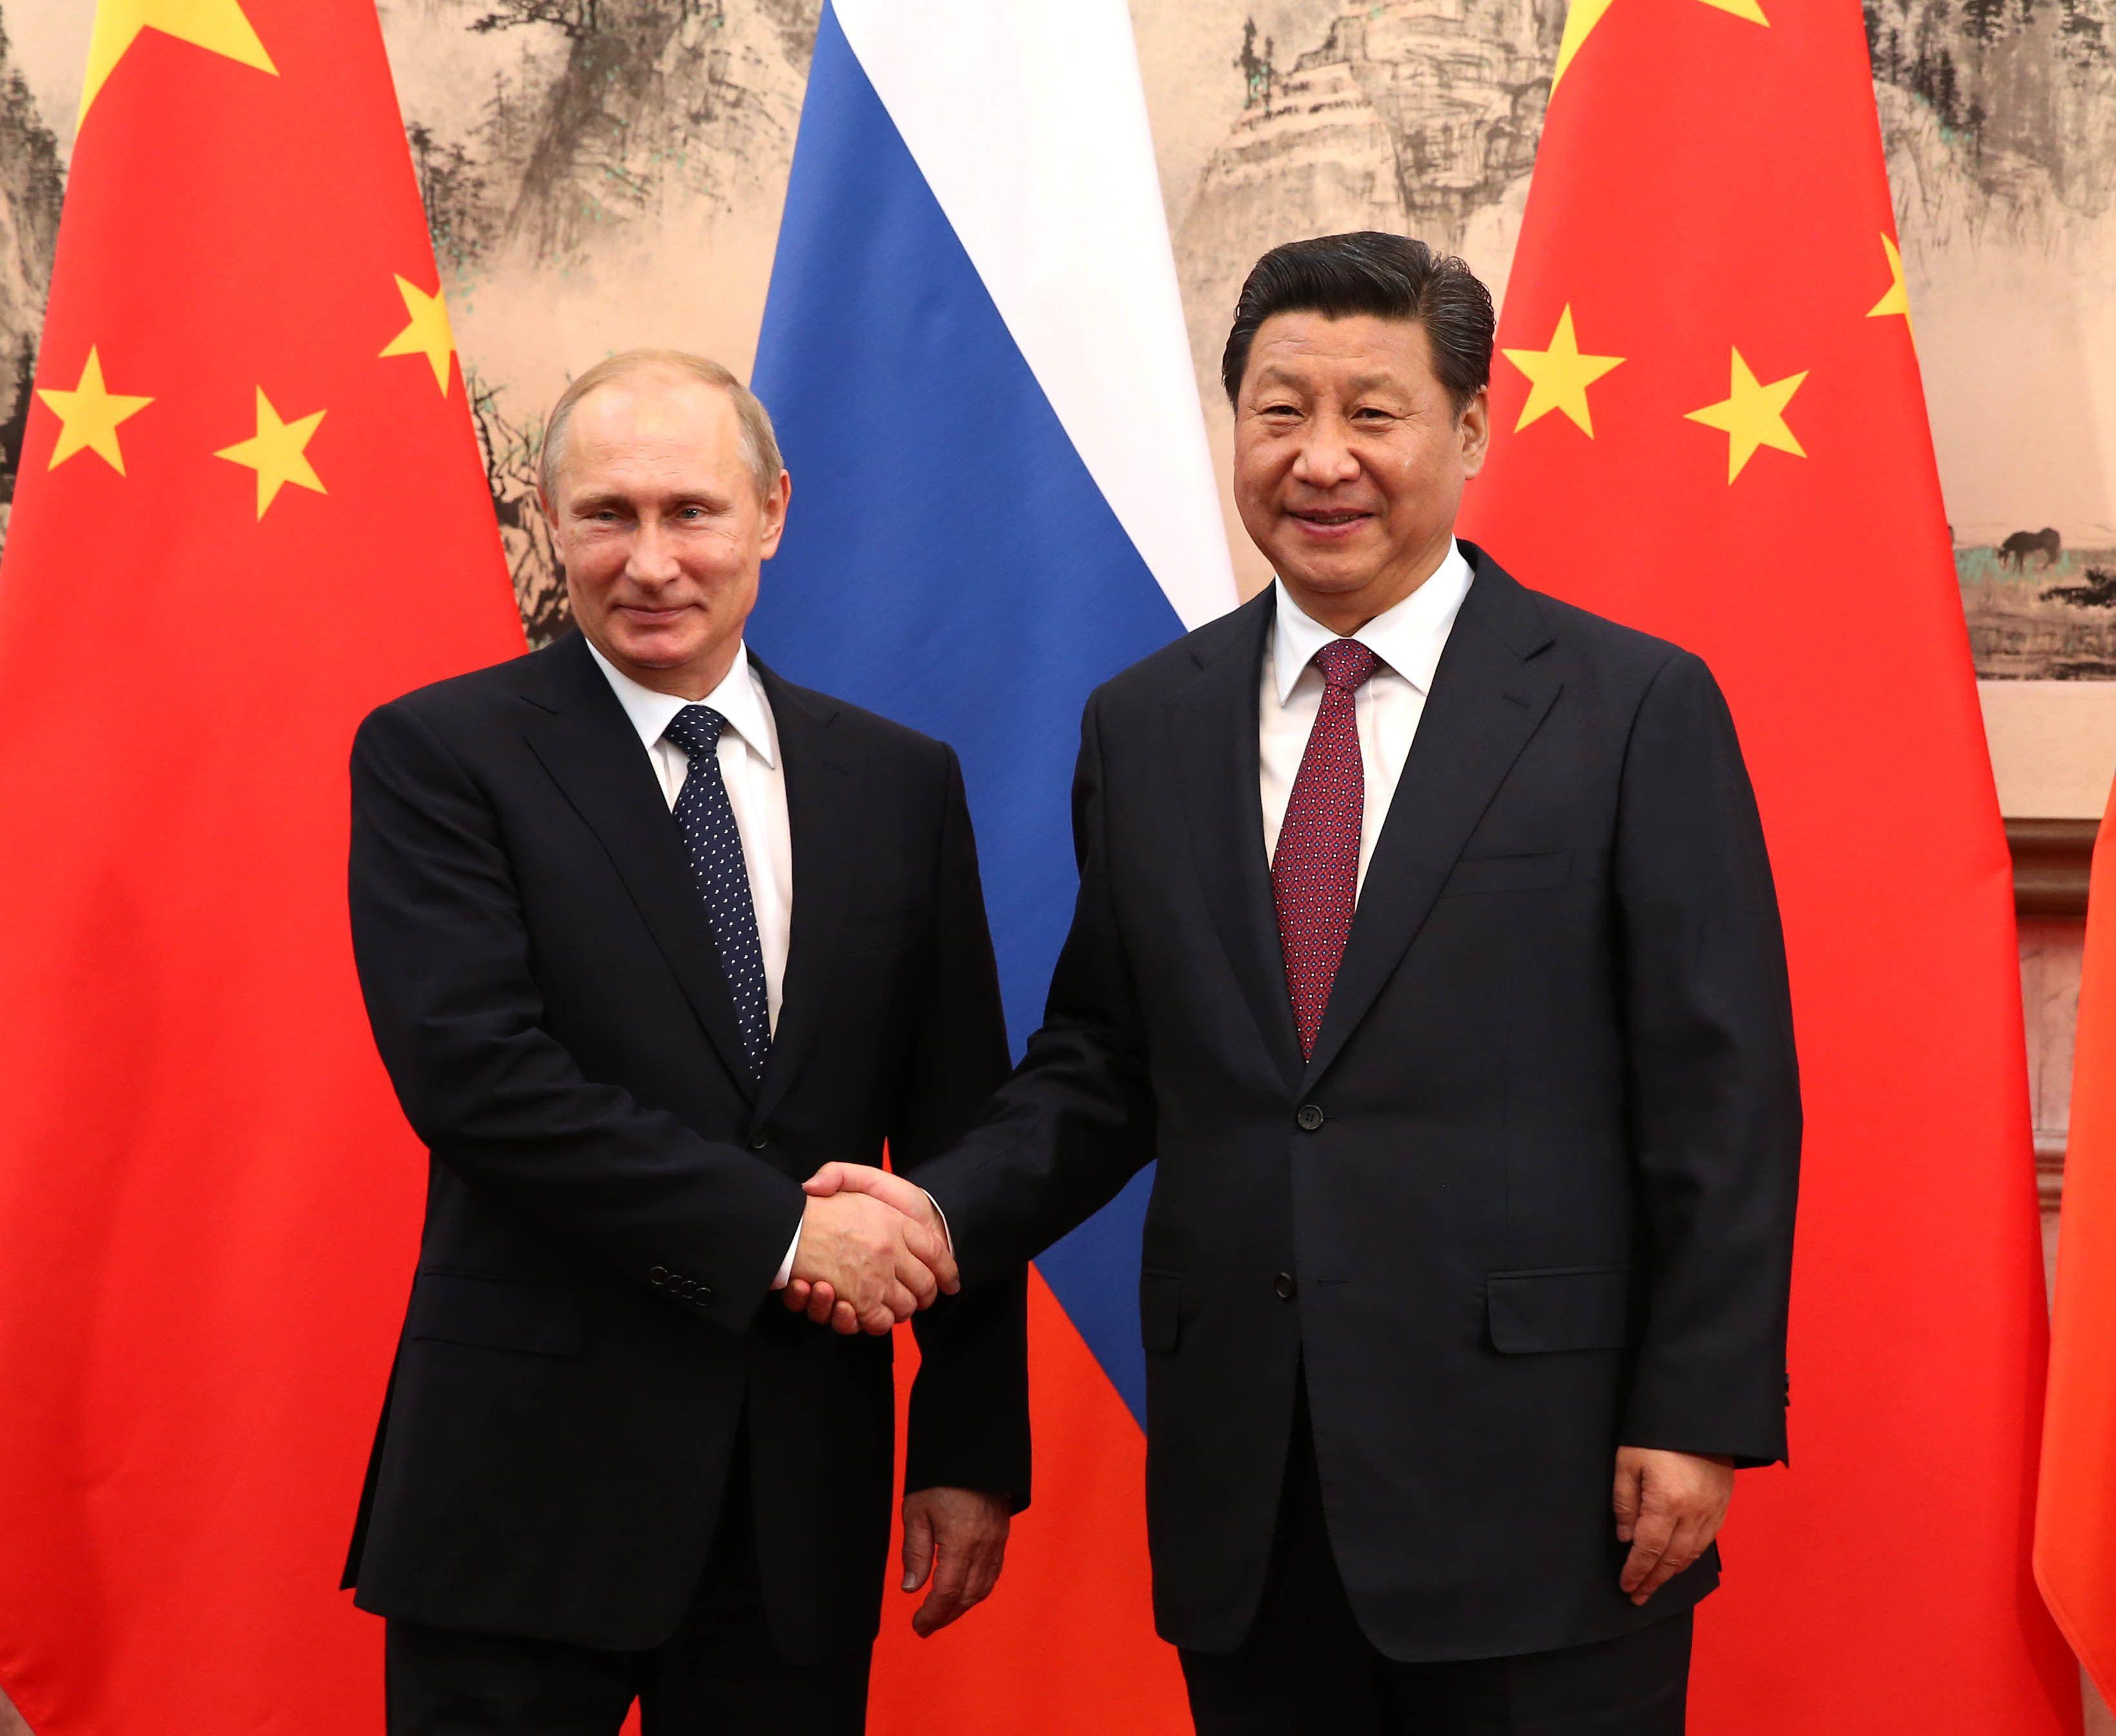 Putin will visit China on May 16-17